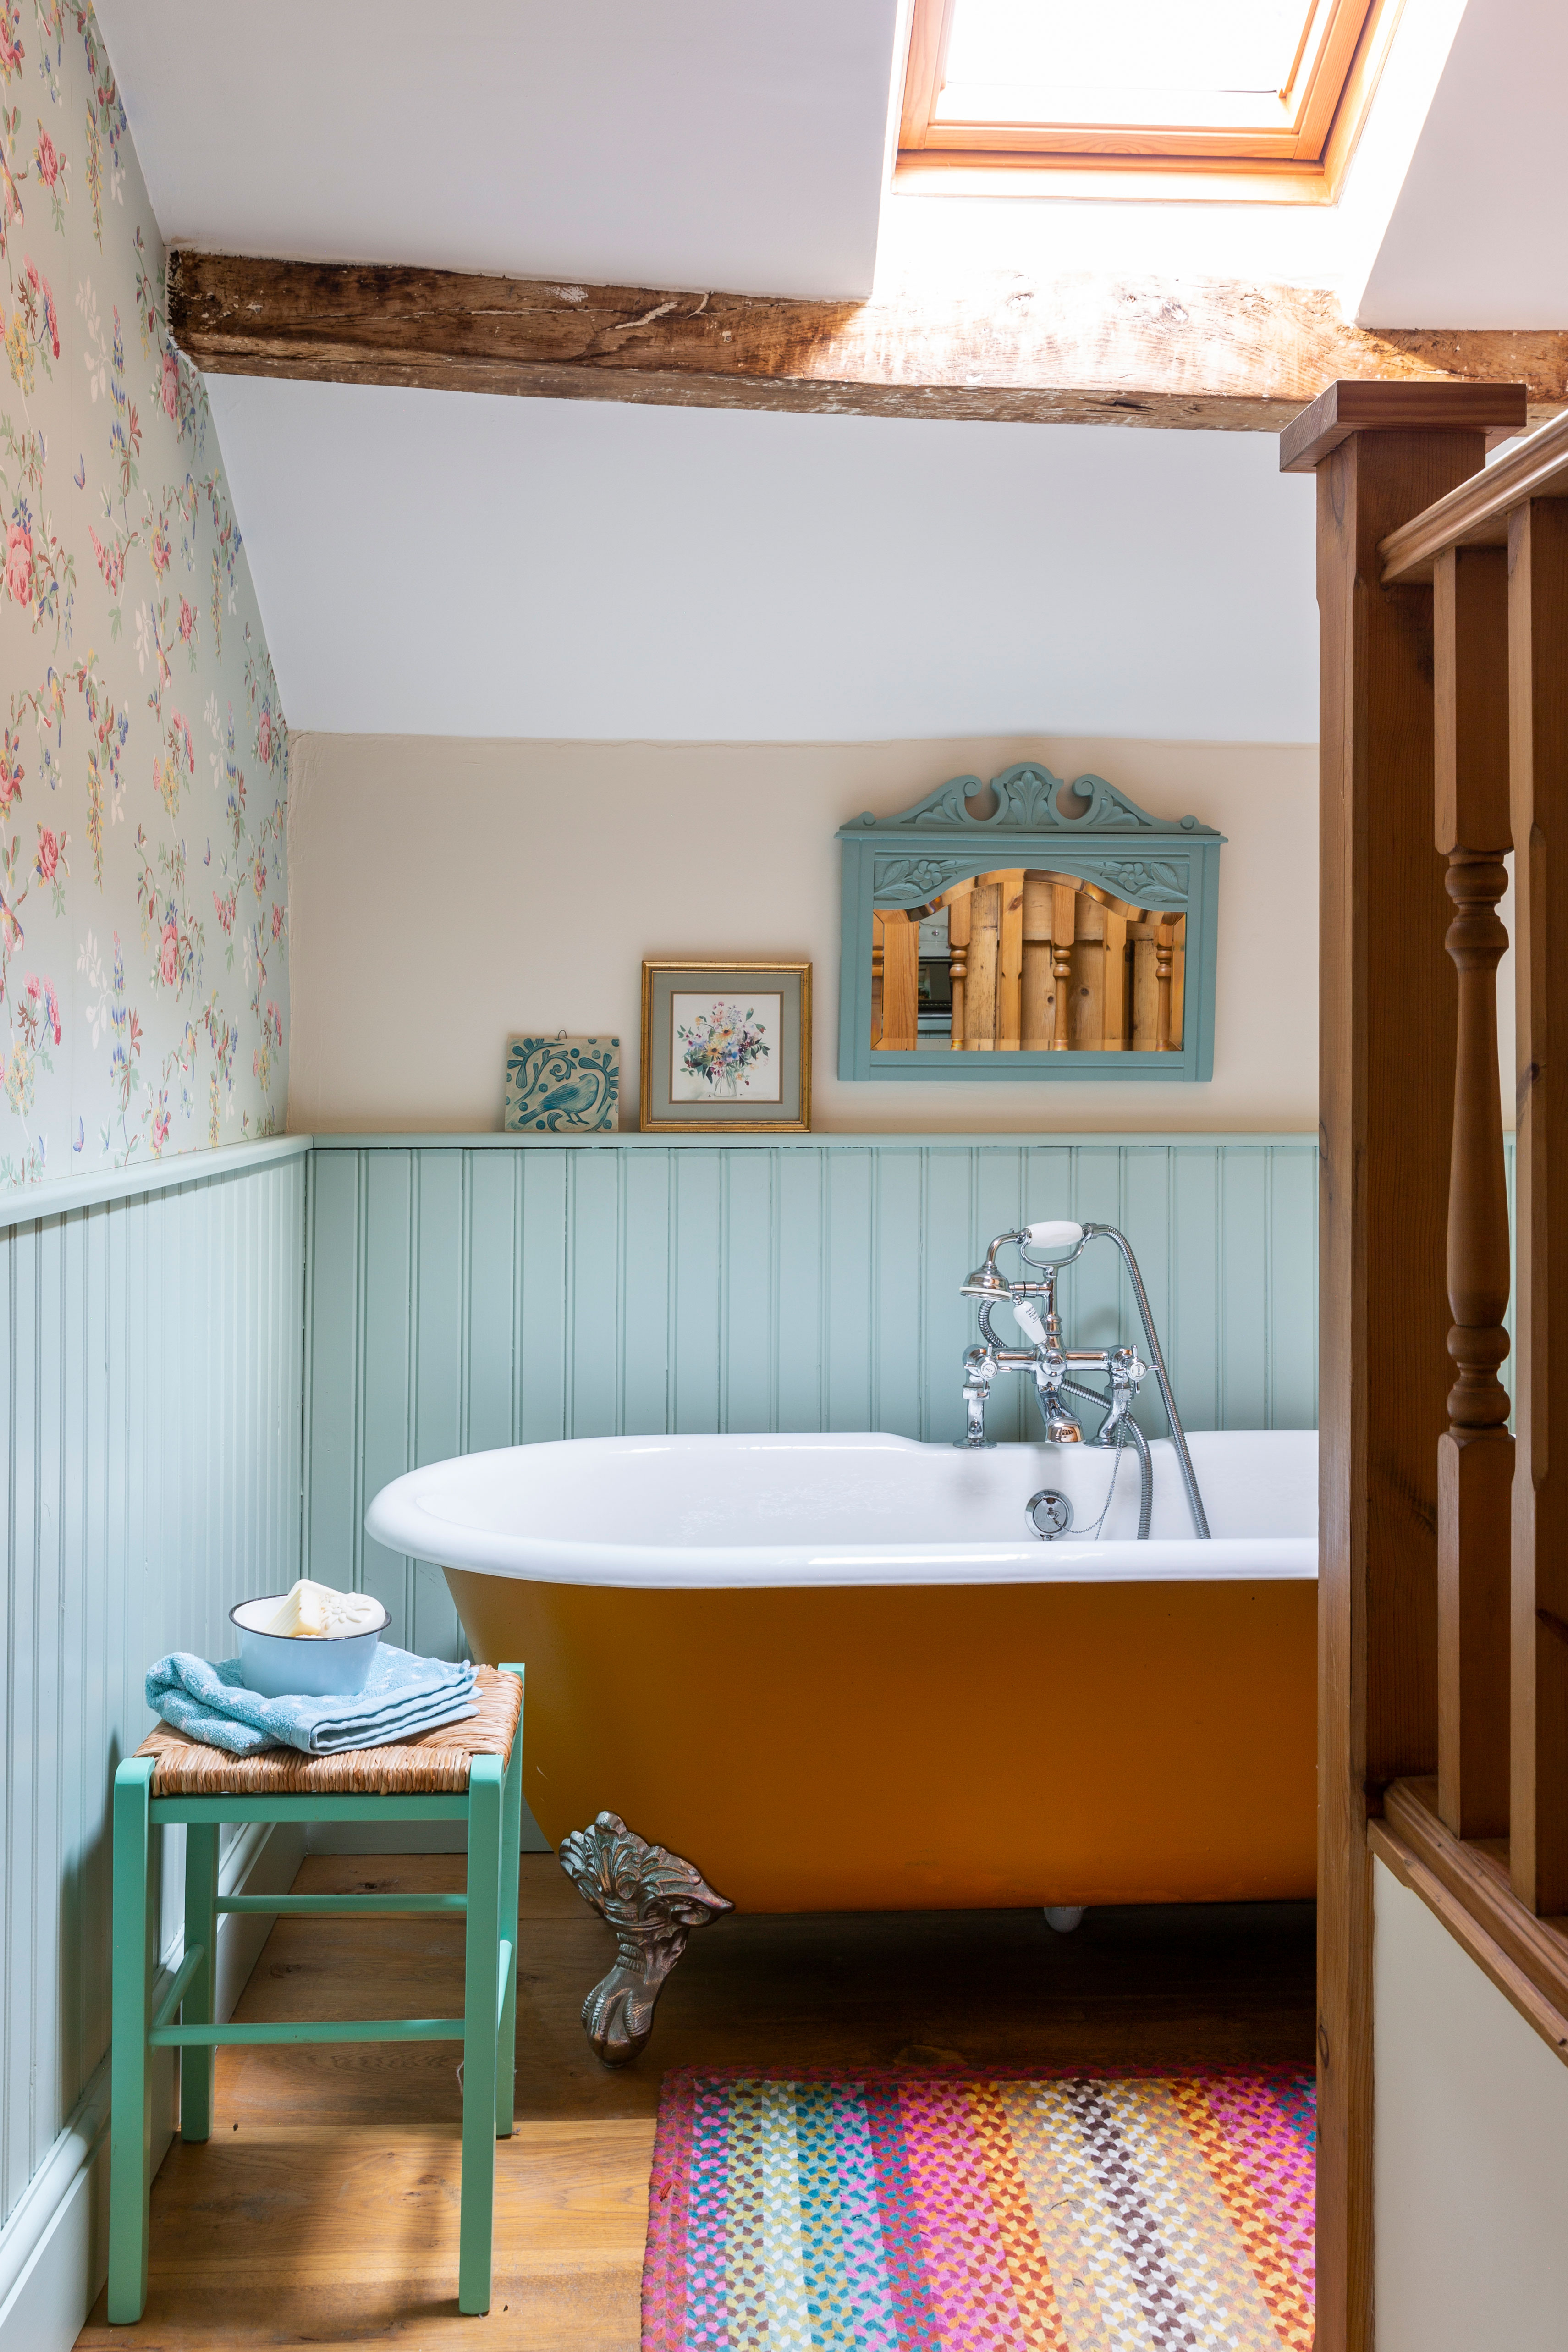 Traditional Bathroom Ideas 20 Ways To, Classic Bathroom Designs